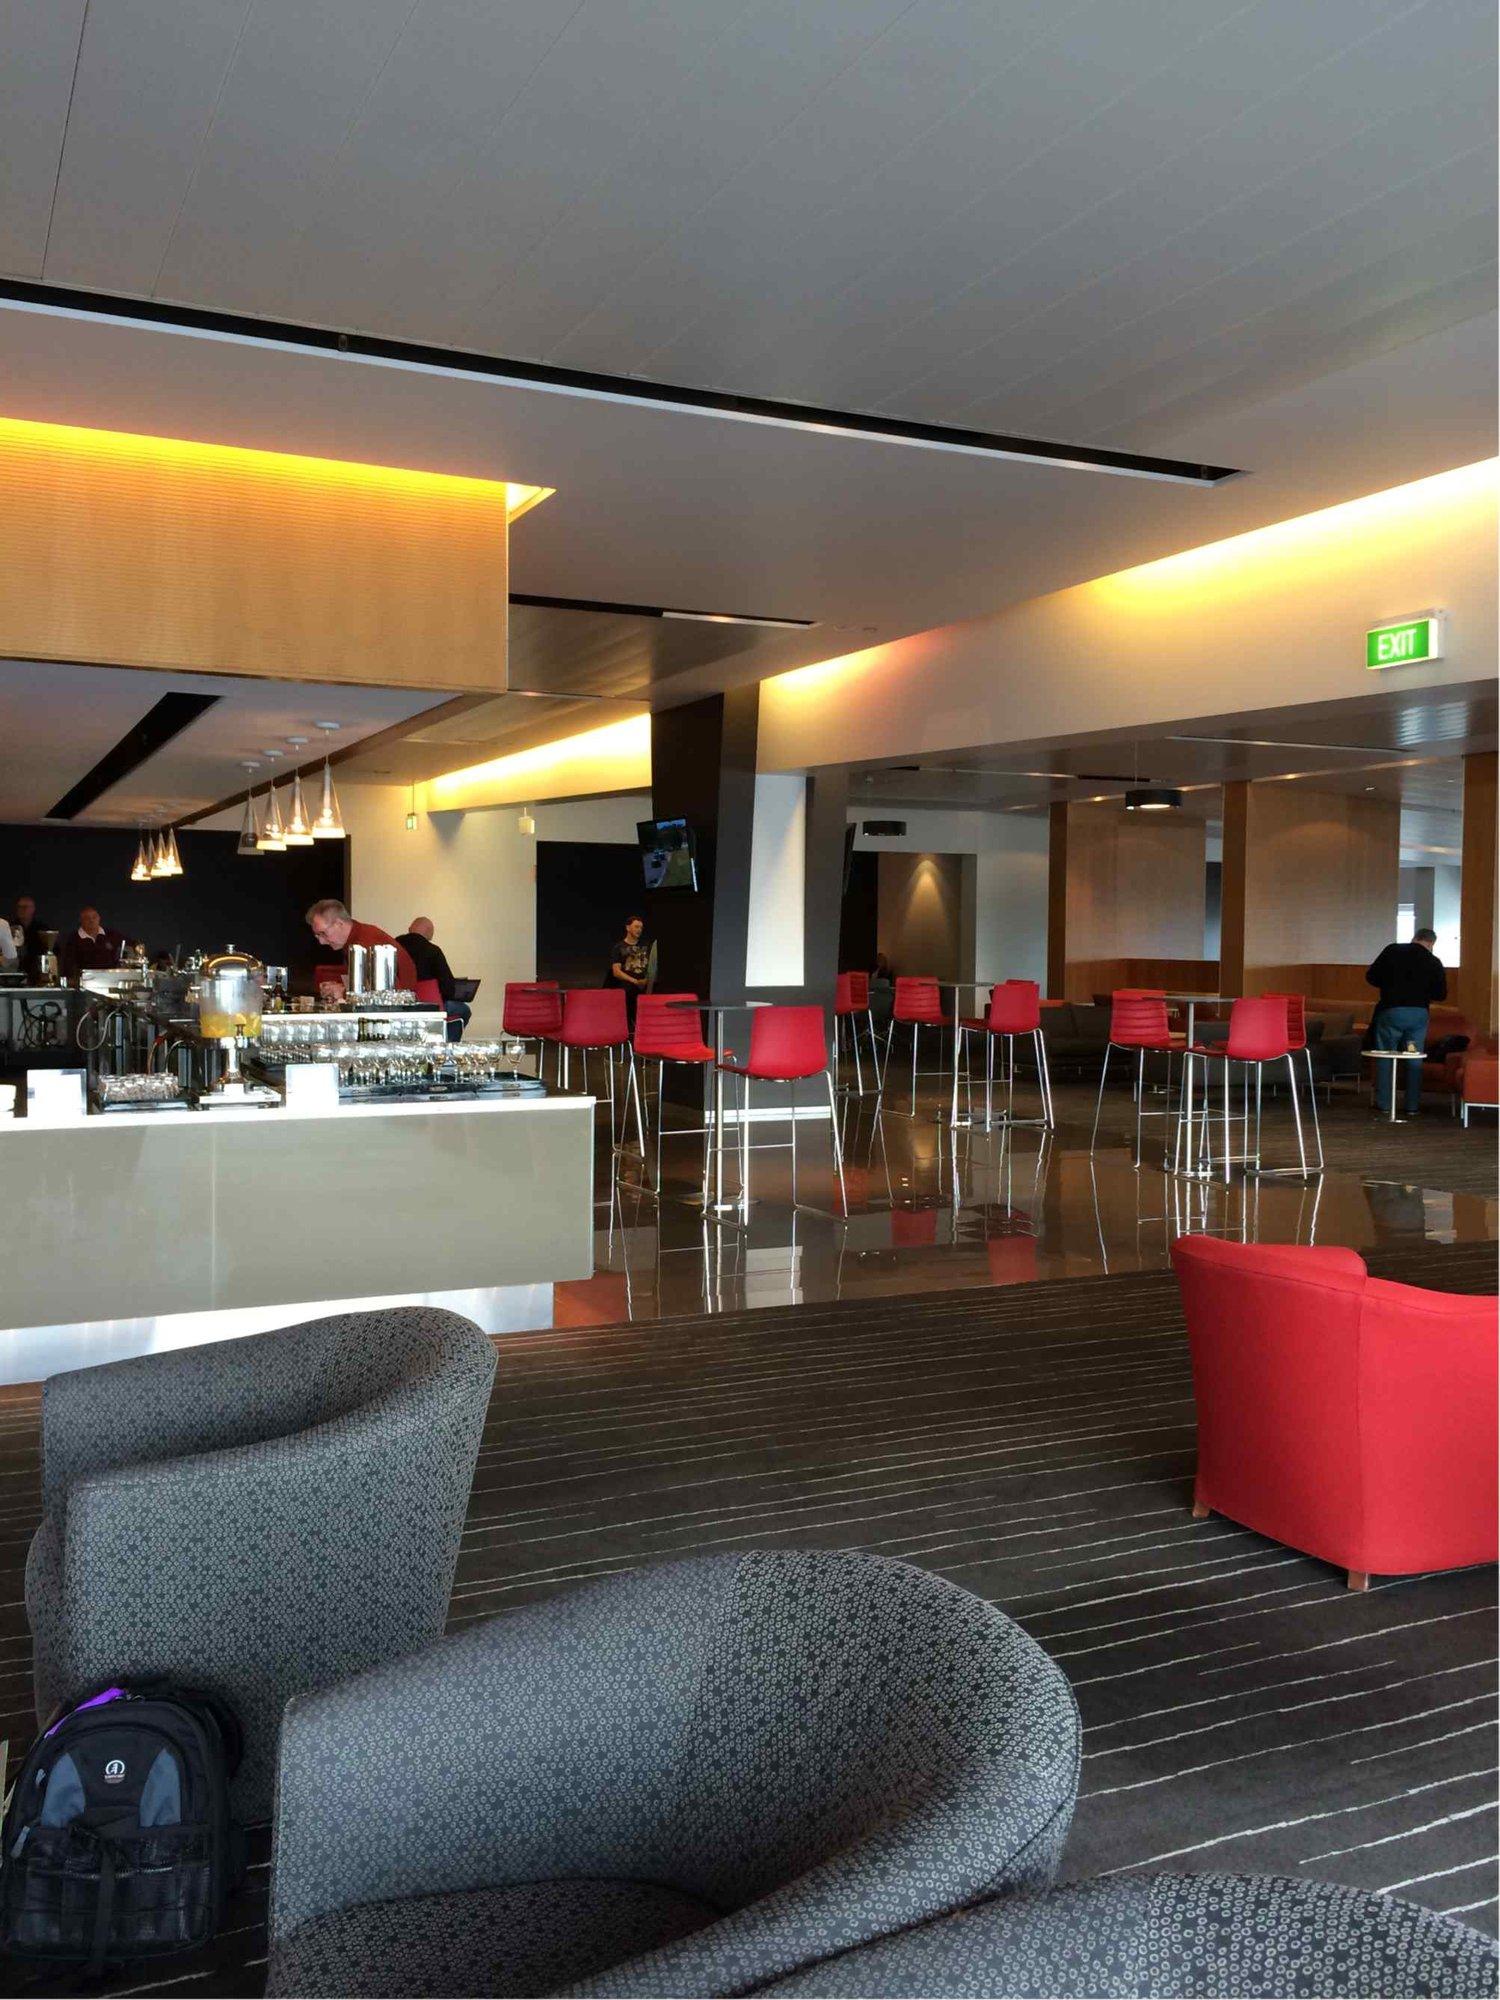 Qantas Club (International Business Lounge) image 2 of 6